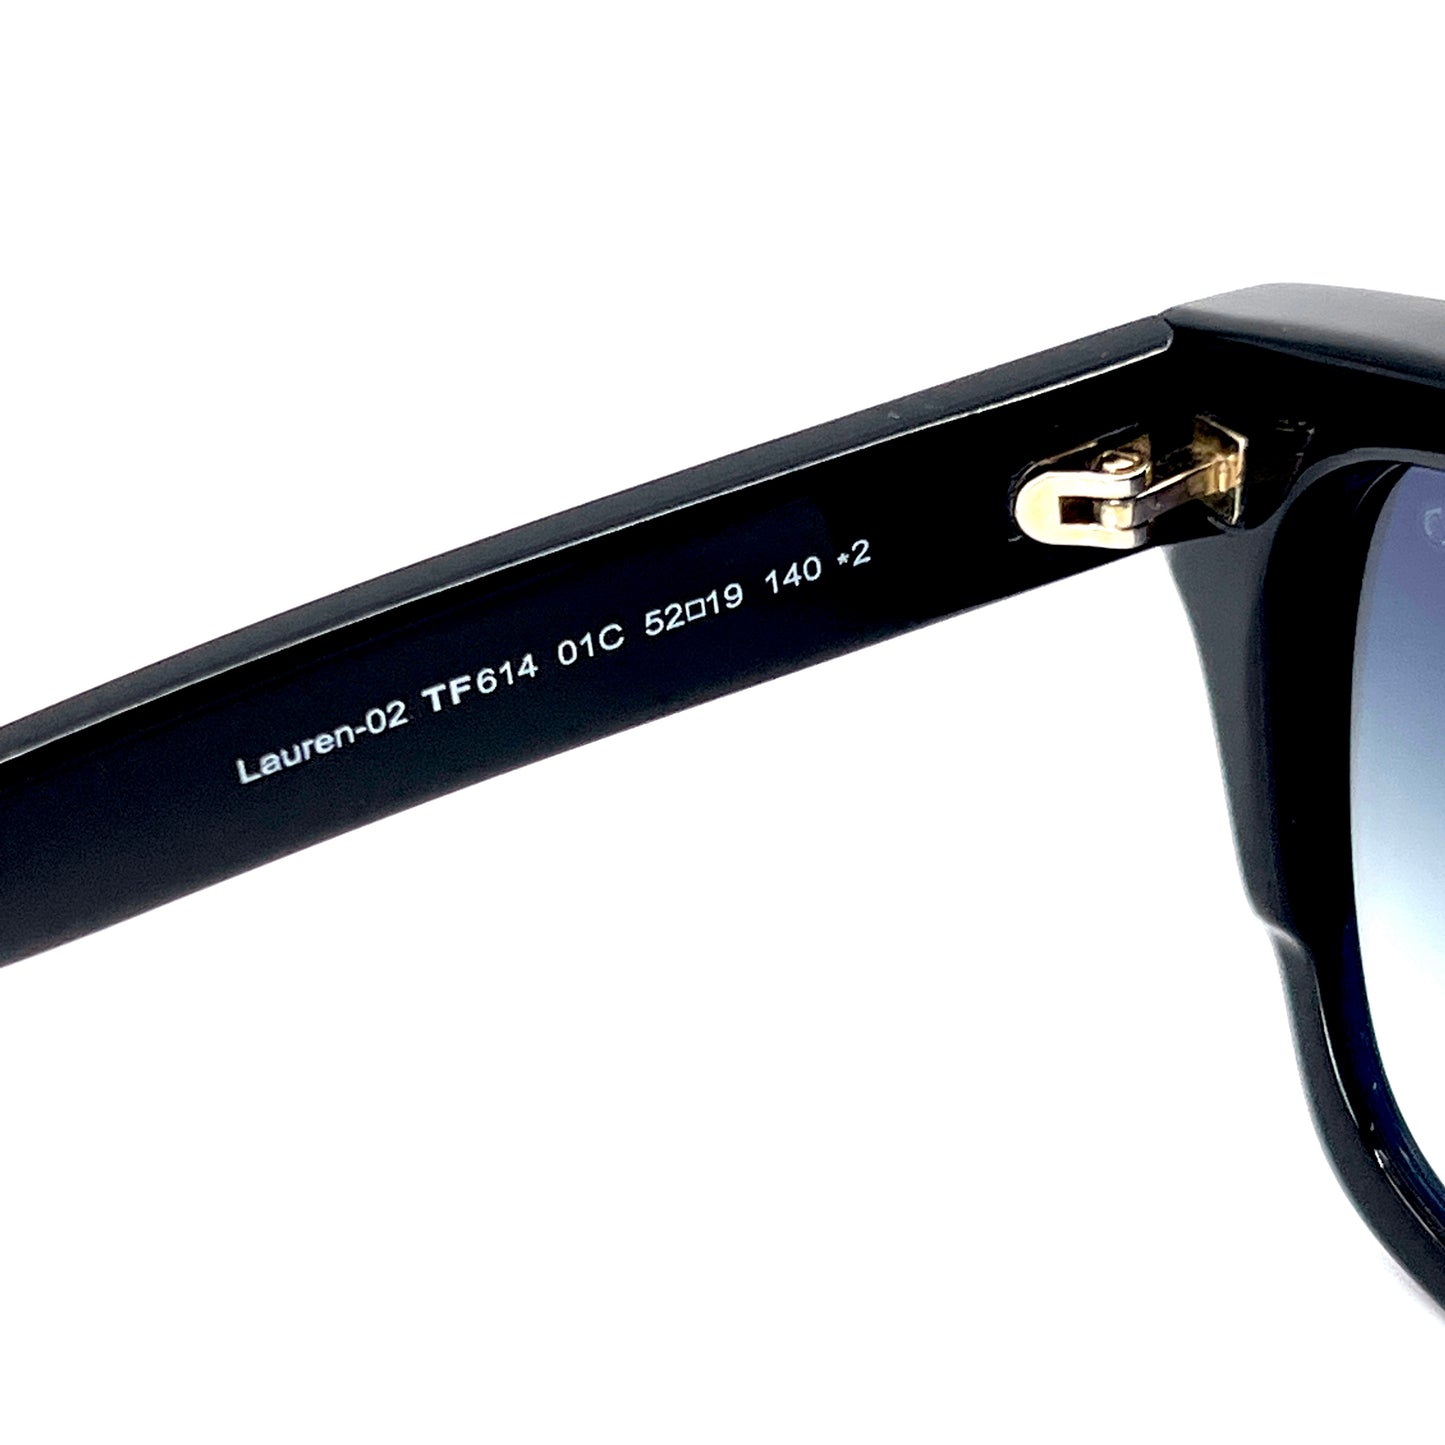 TOM FORD Lauren-02 Sunglasses TF614 01C